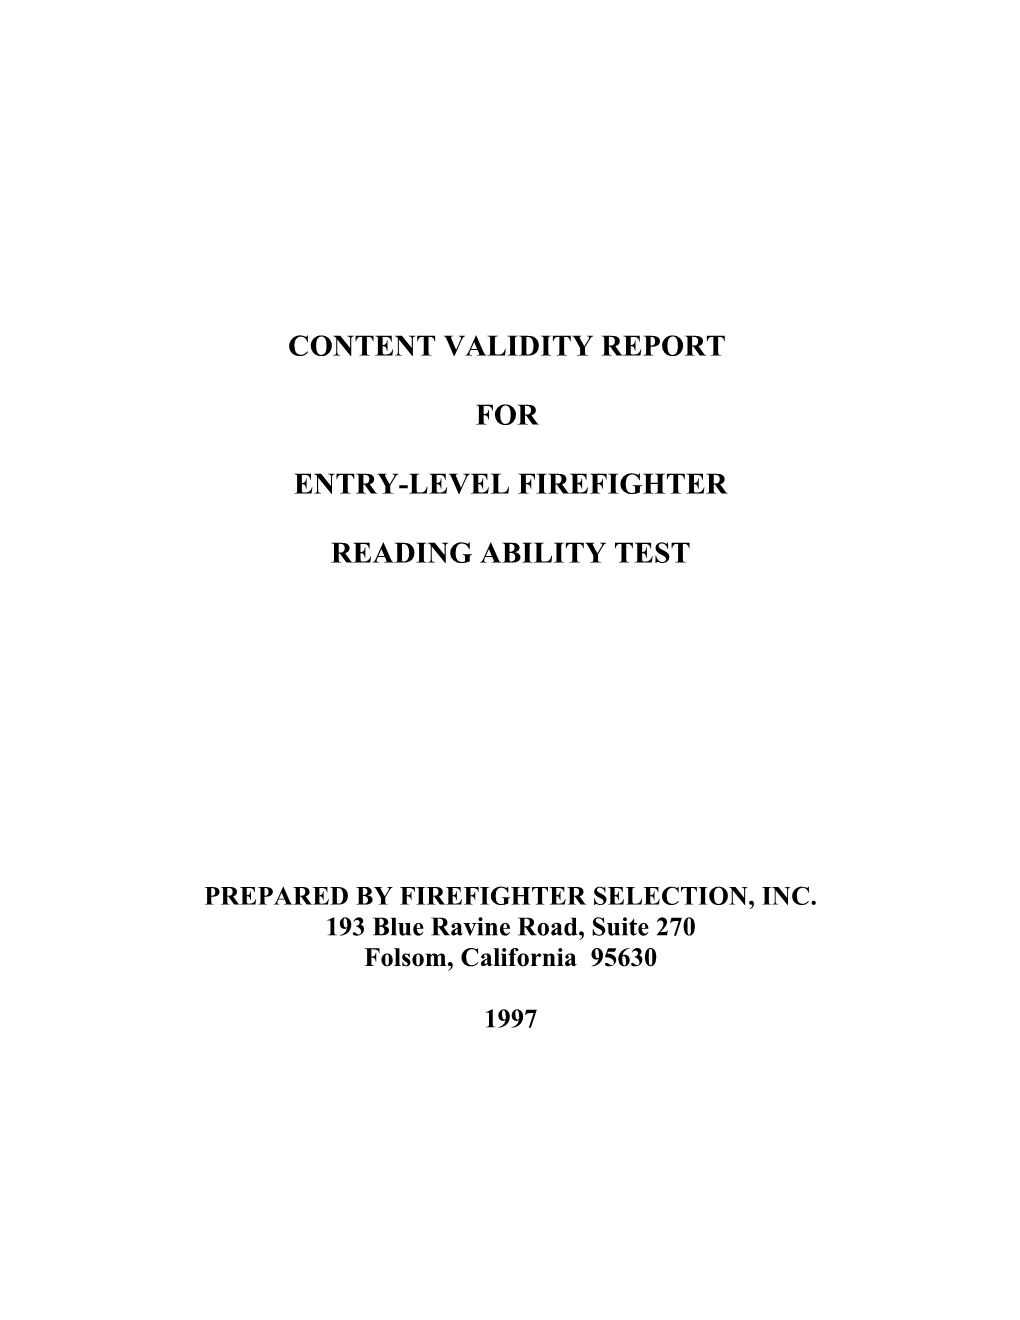 Content Validity Report